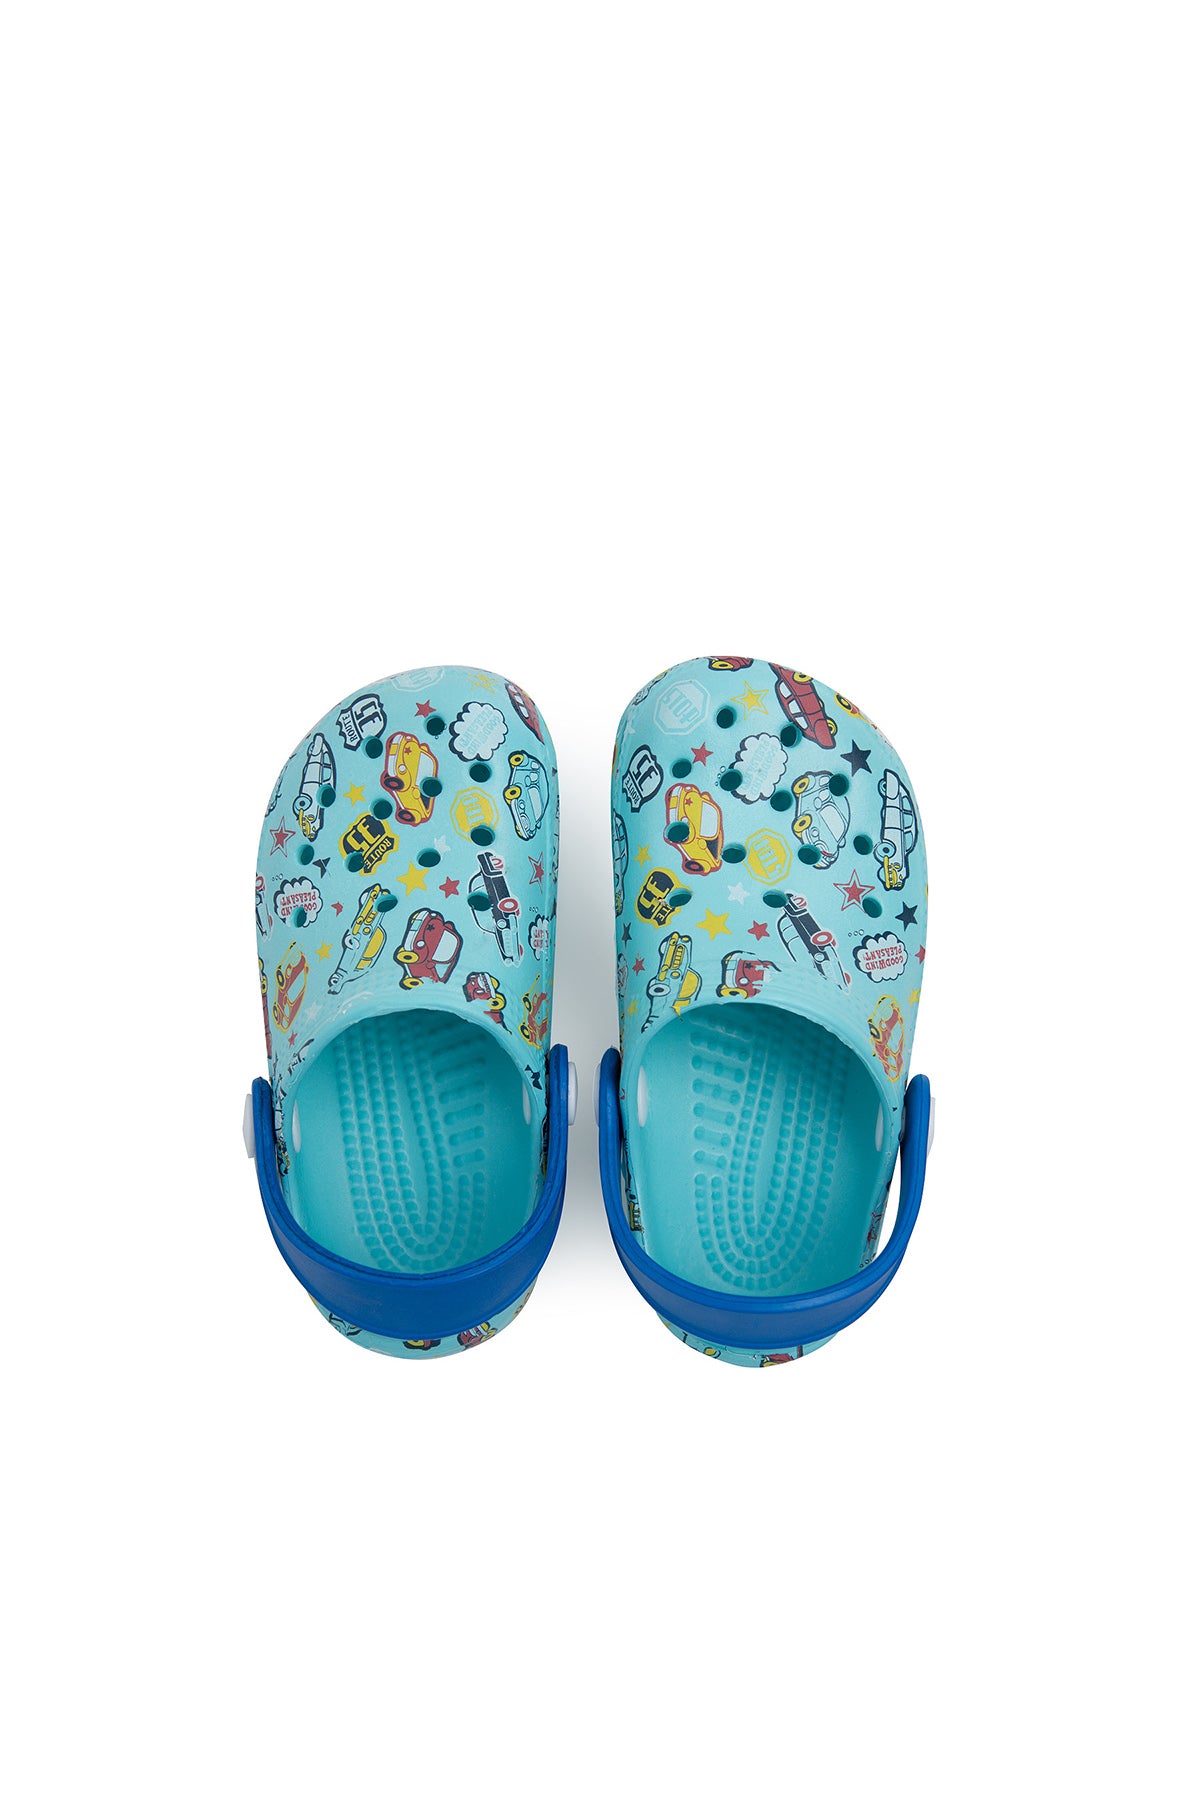 Akınalbella Çocuk Sandalet E012B065 Mavi-Mint